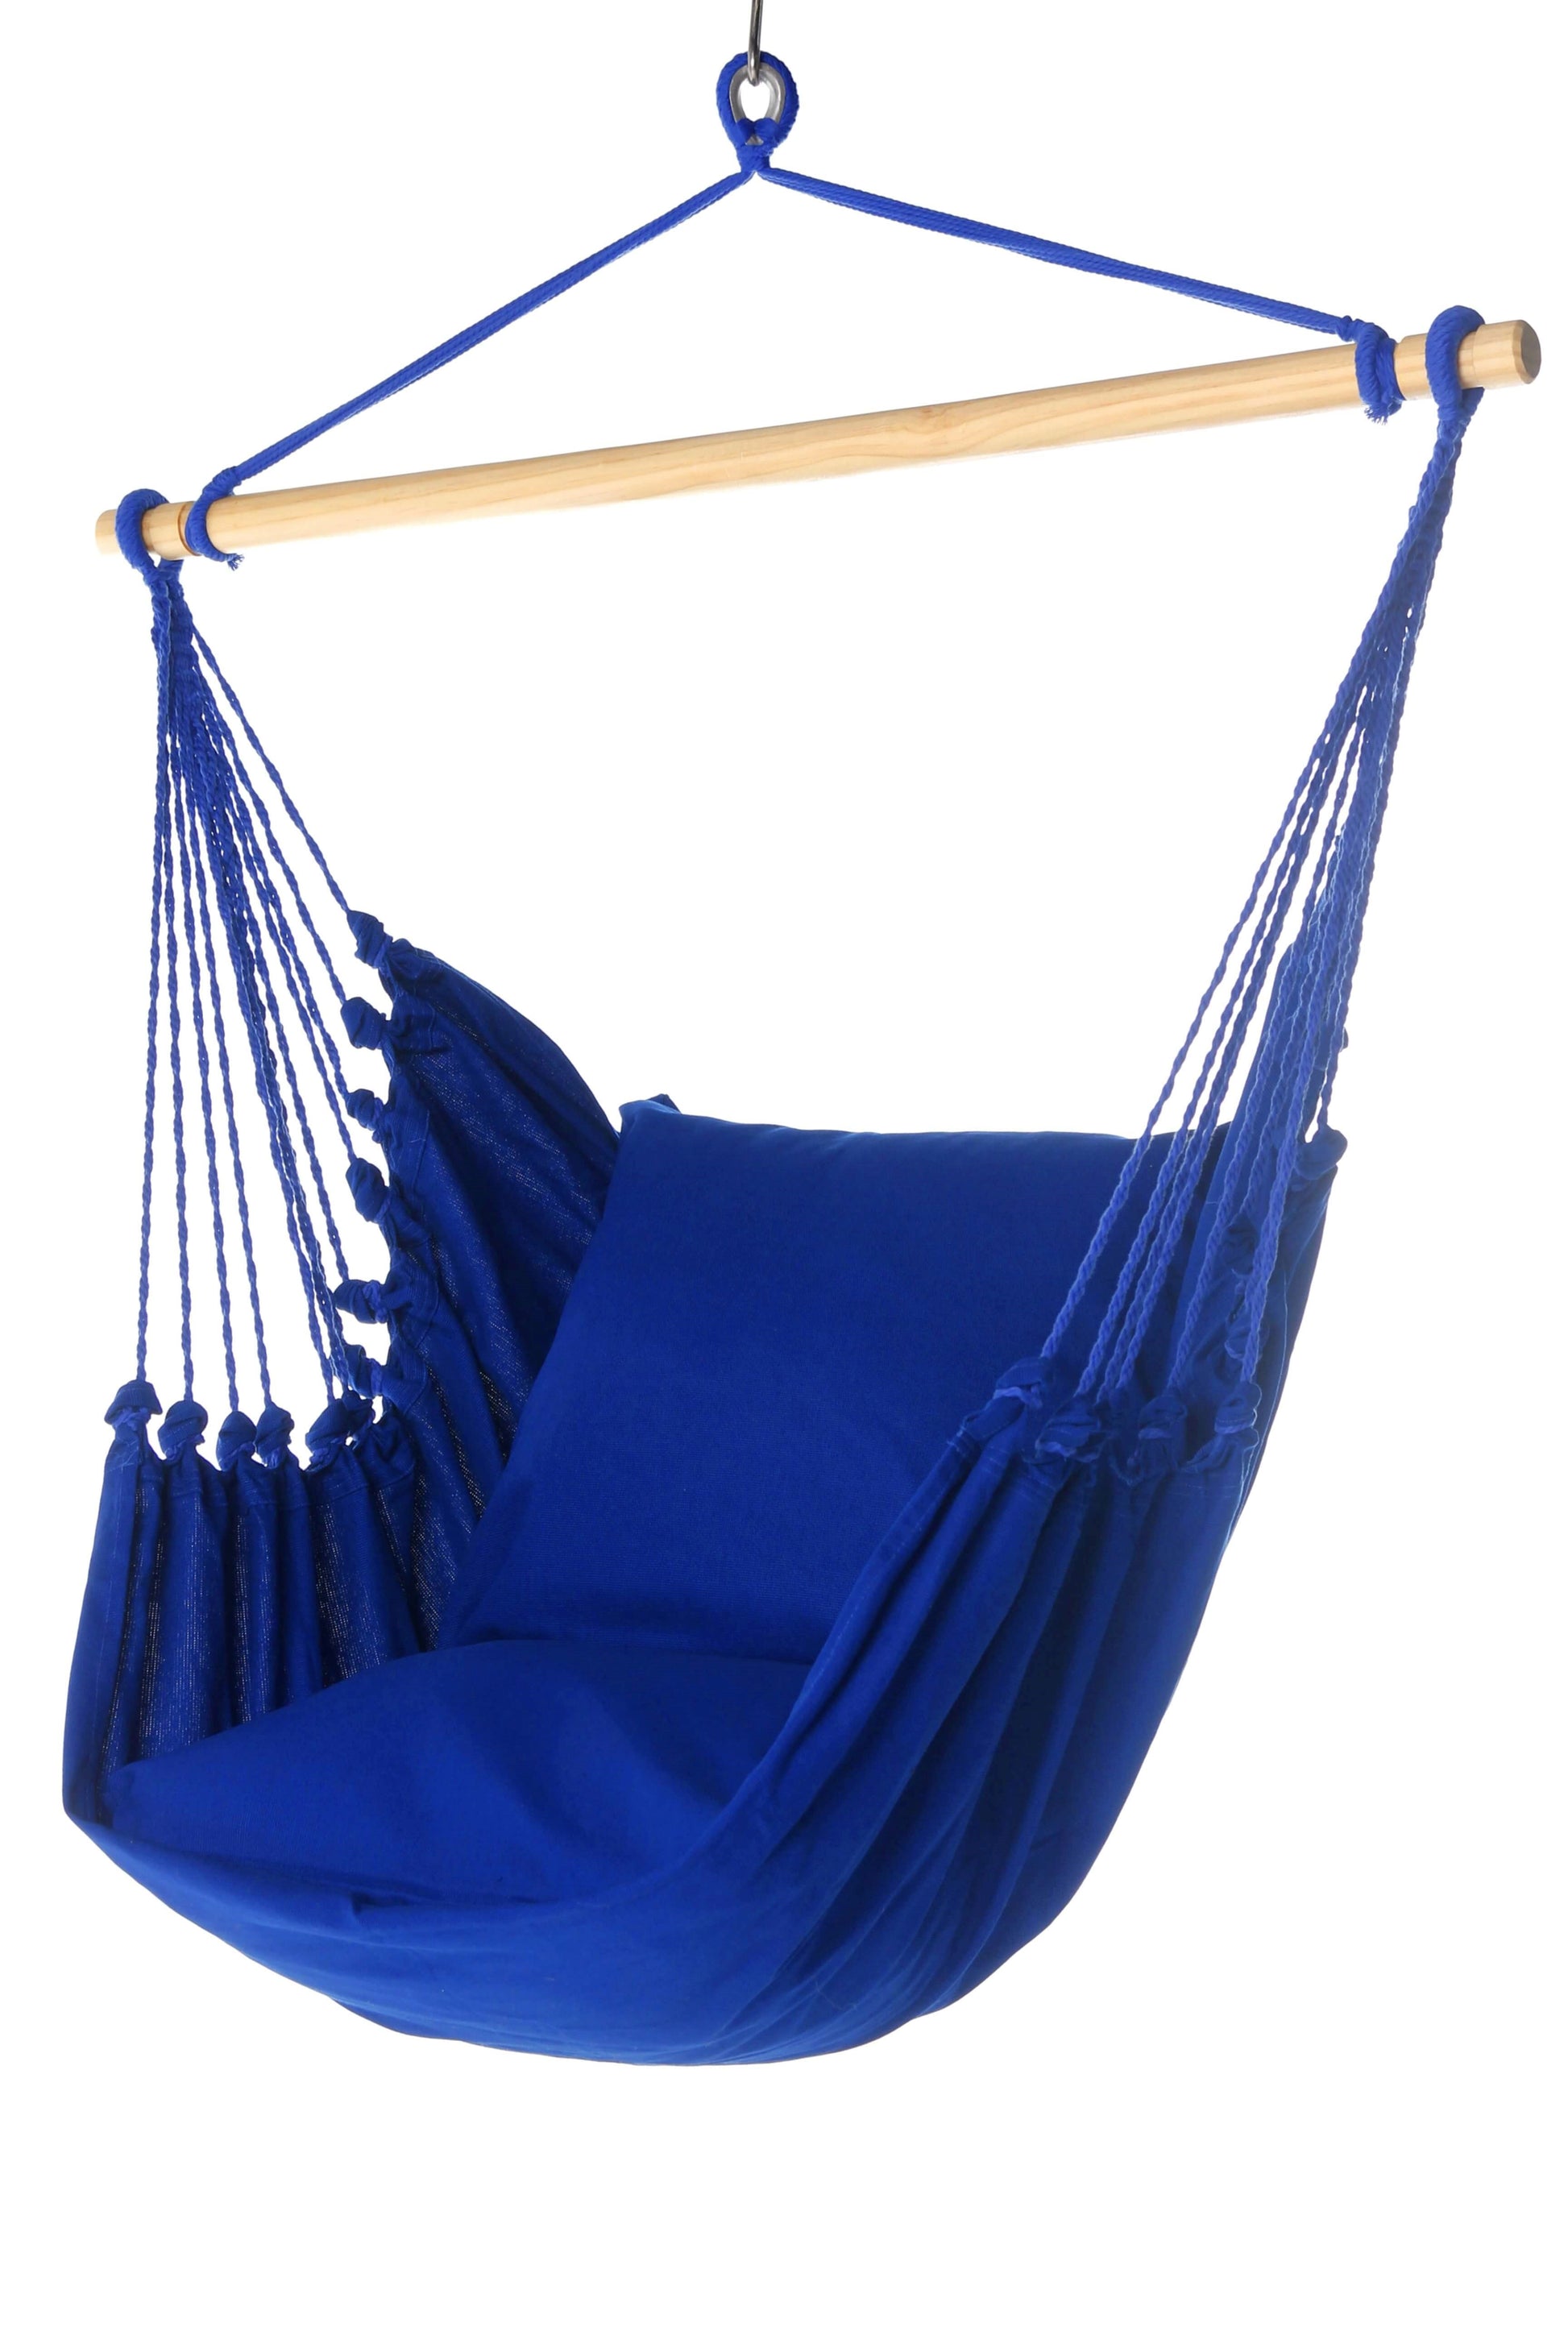 hammock with swing